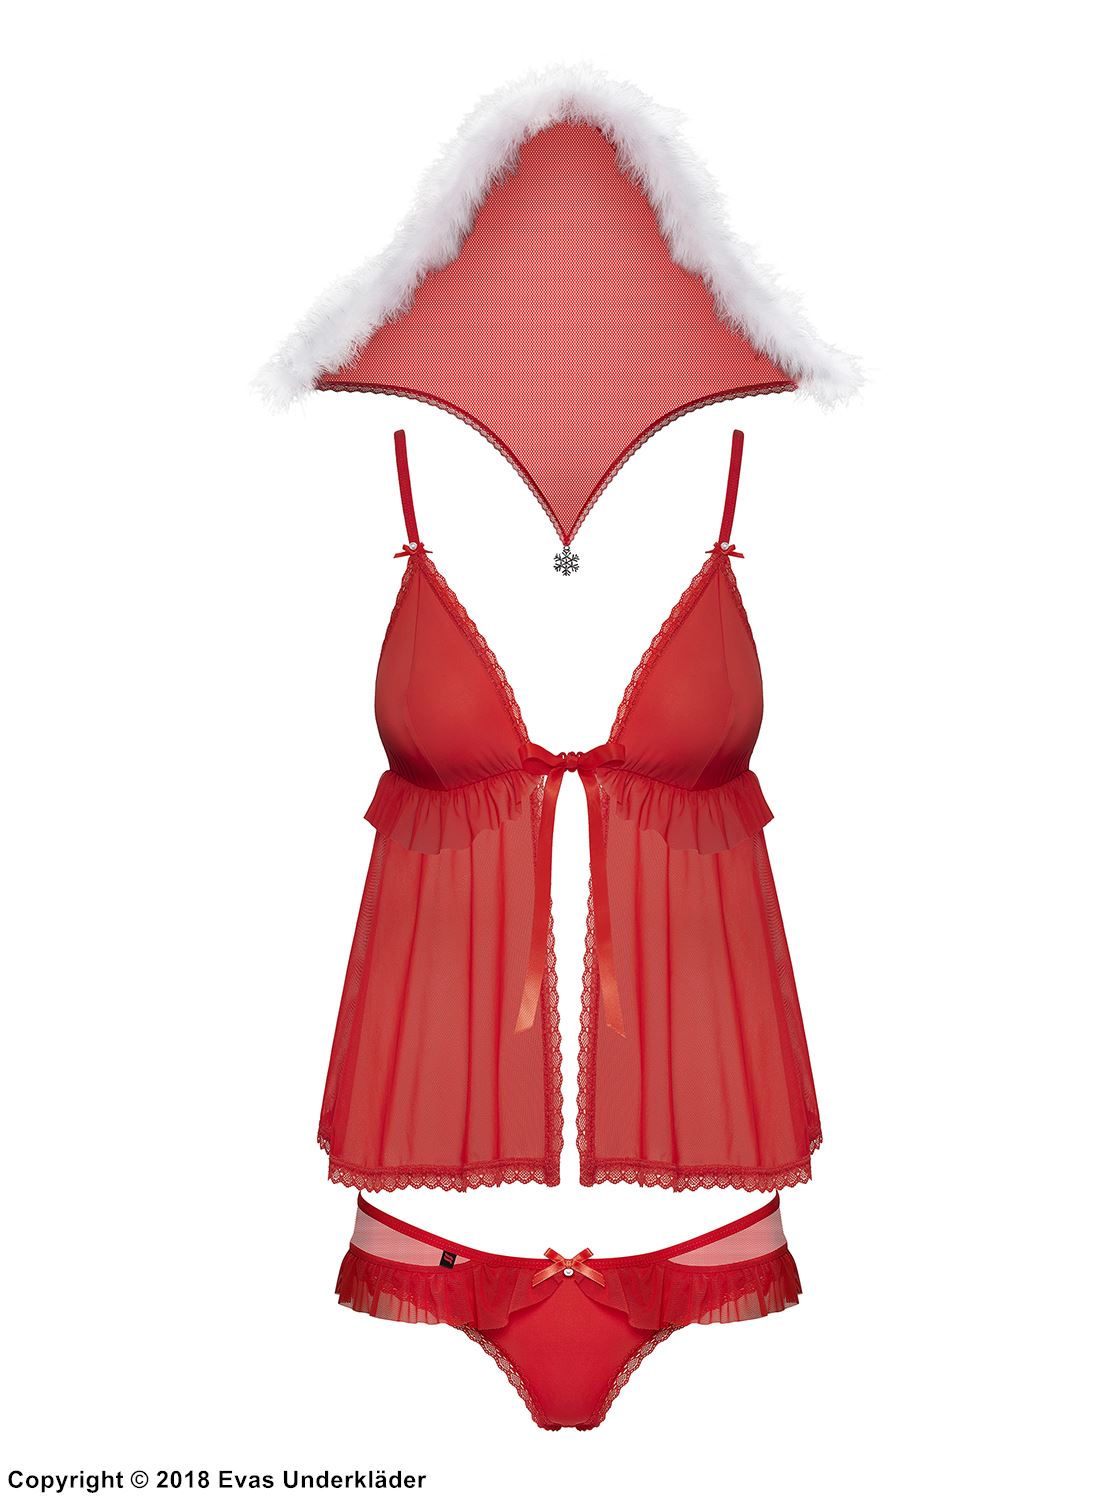 Female Santa Claus, costume lingerie, marabou trim, hood